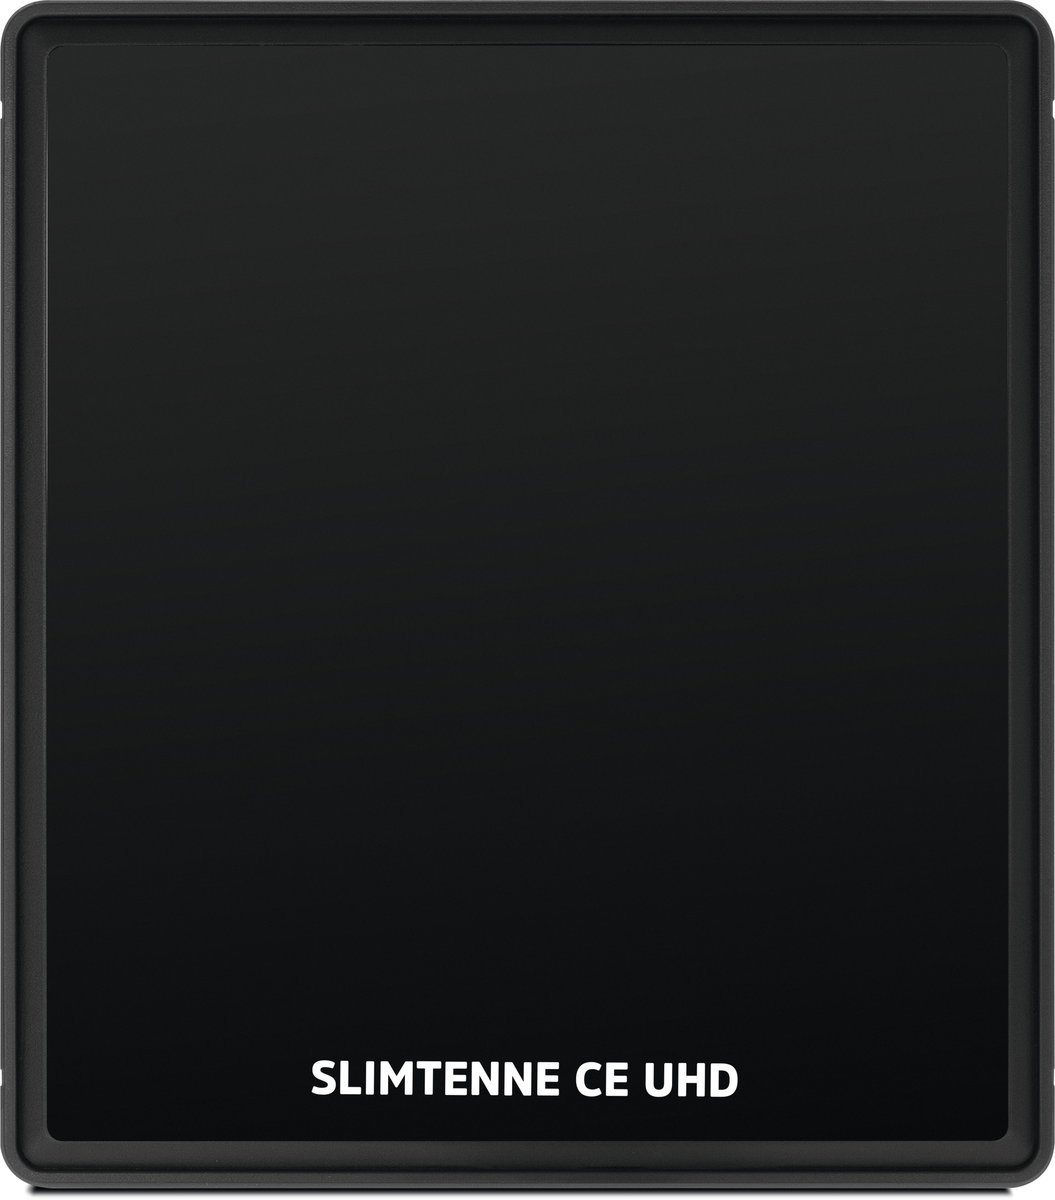 Technisat Antena SLIMTENNE CE UHD 181662